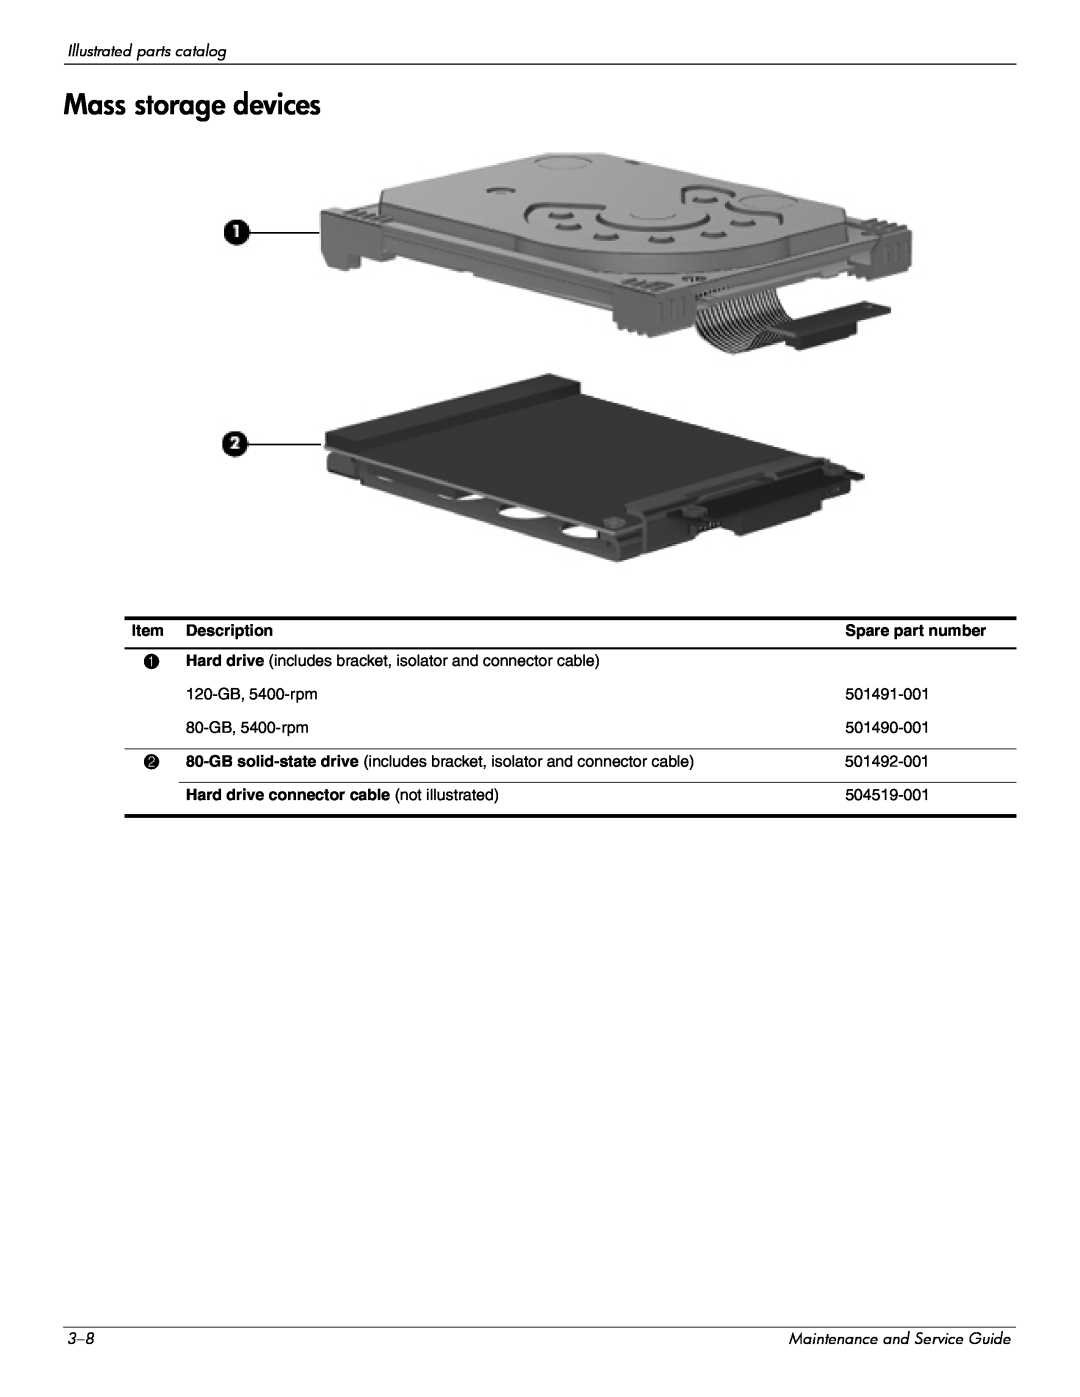 Hitachi 2730P manual Mass storage devices, Illustrated parts catalog 